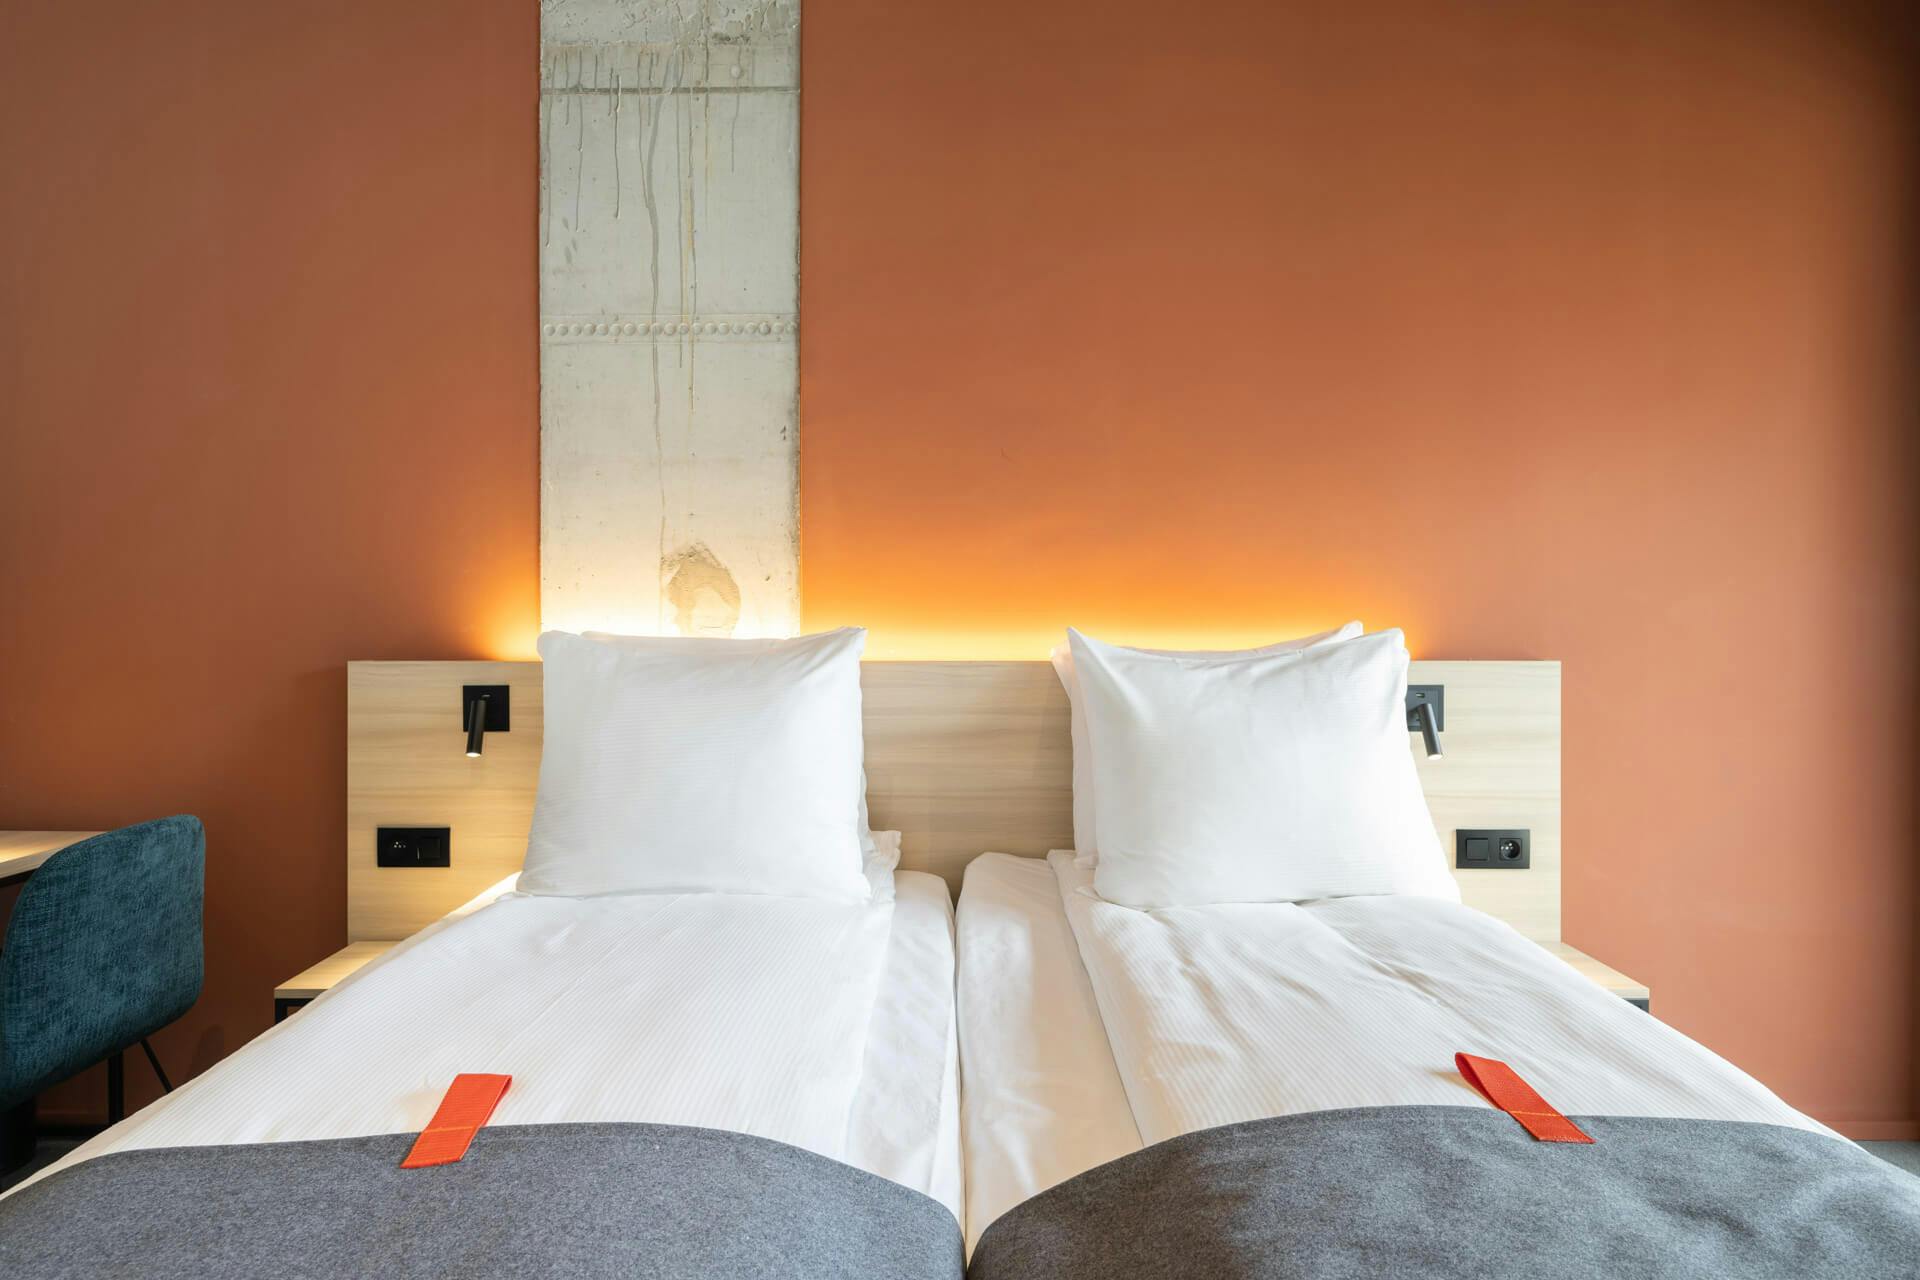 Twin beds, orange wall, chair, desk